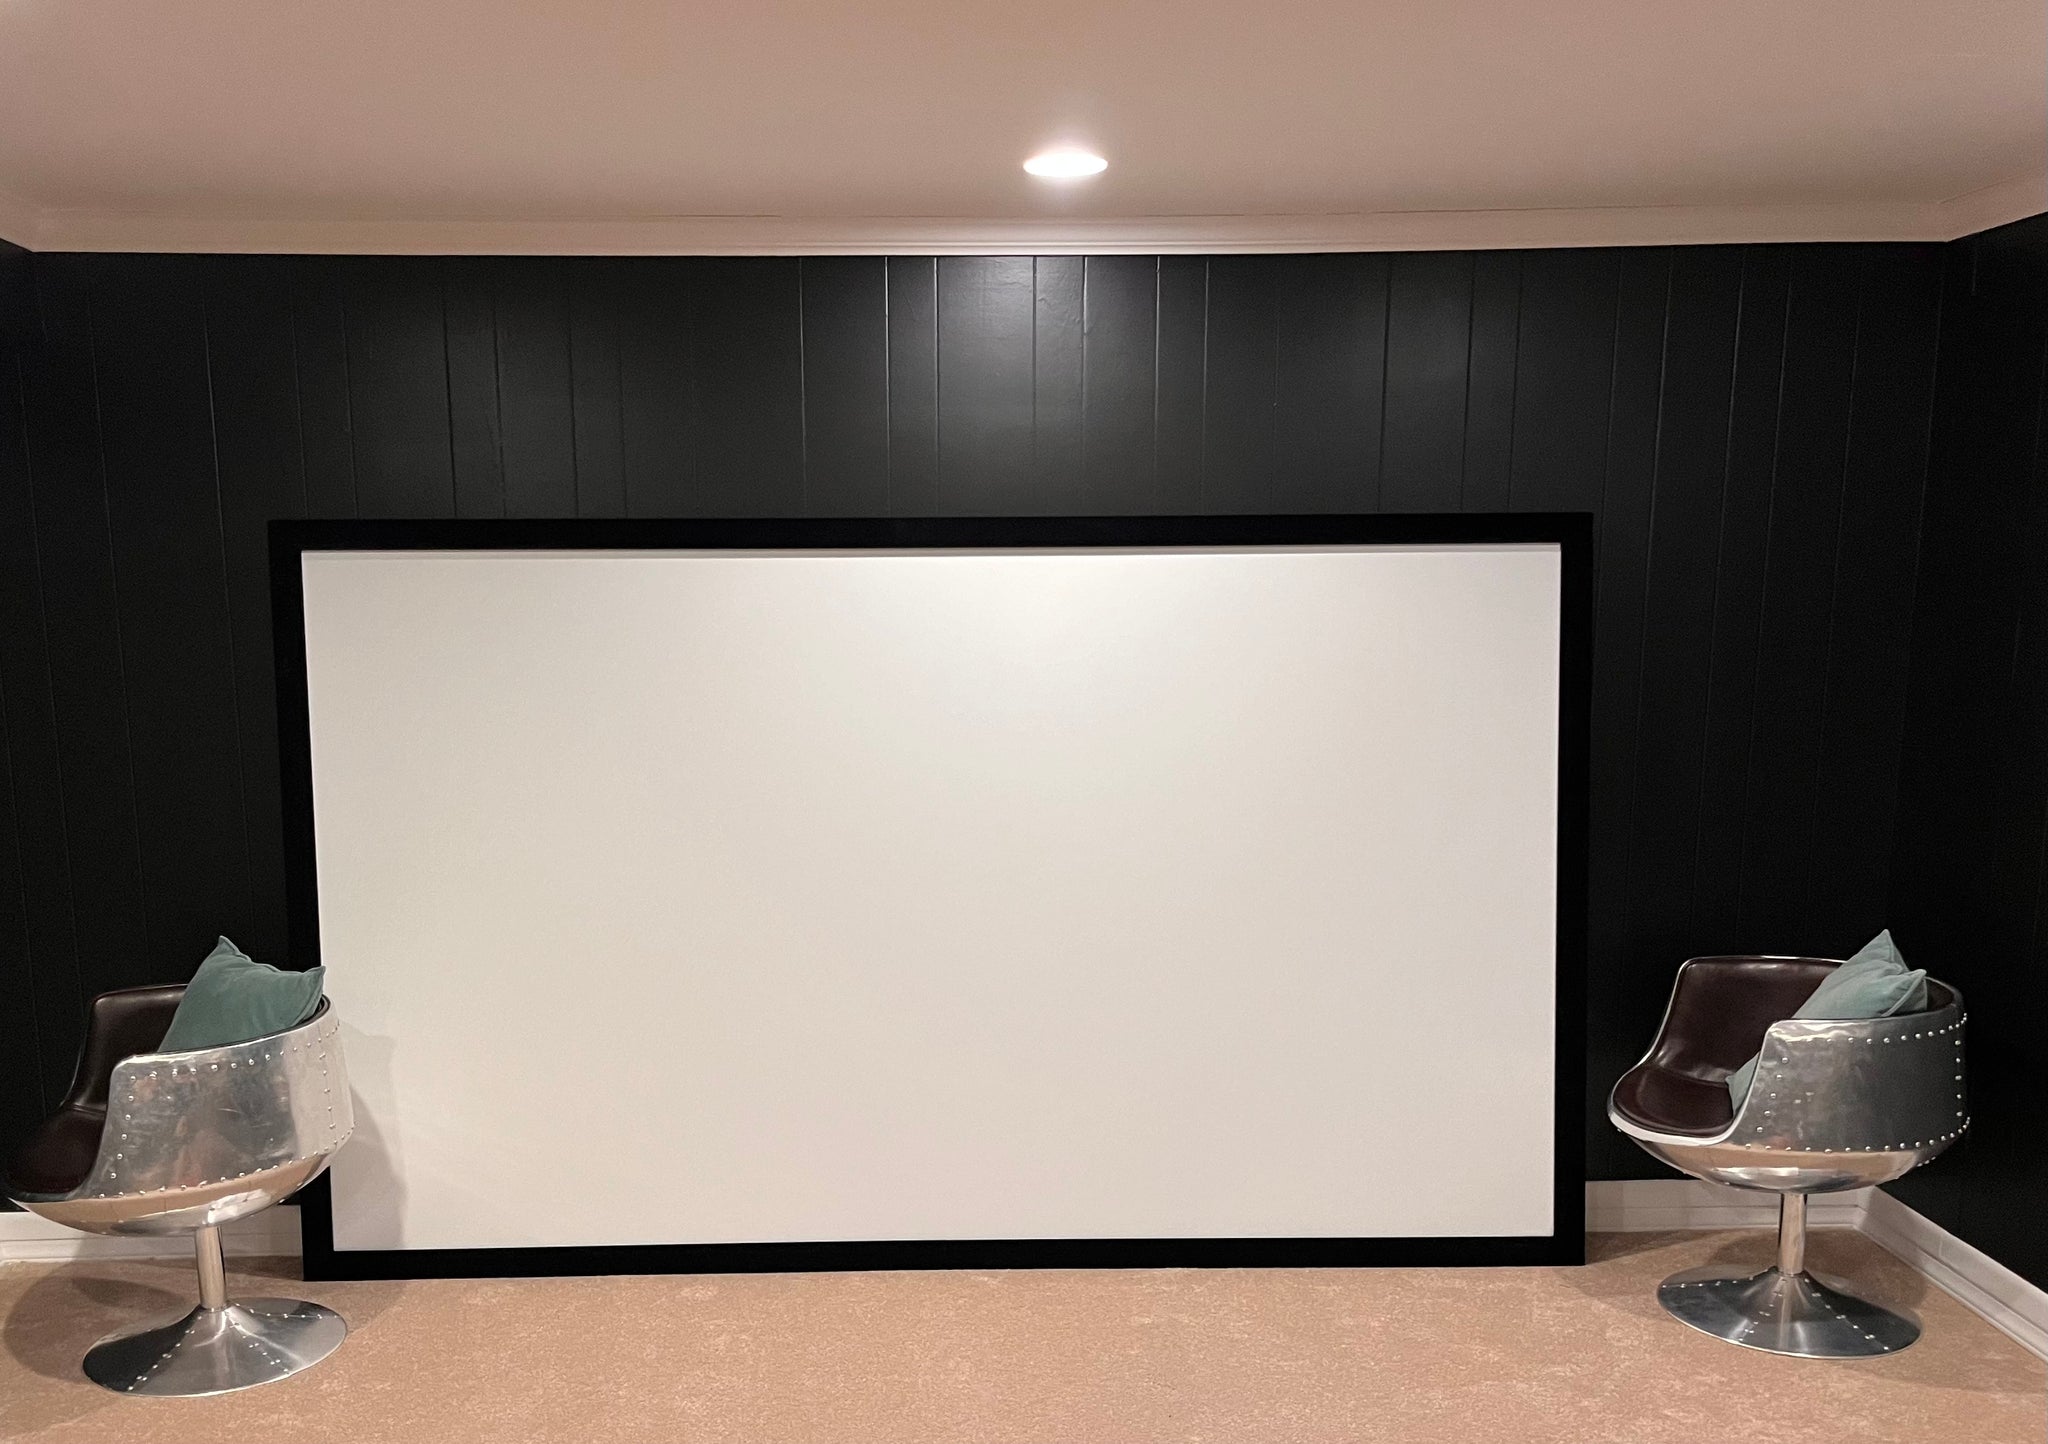 5'x9' Movie Projector Screen